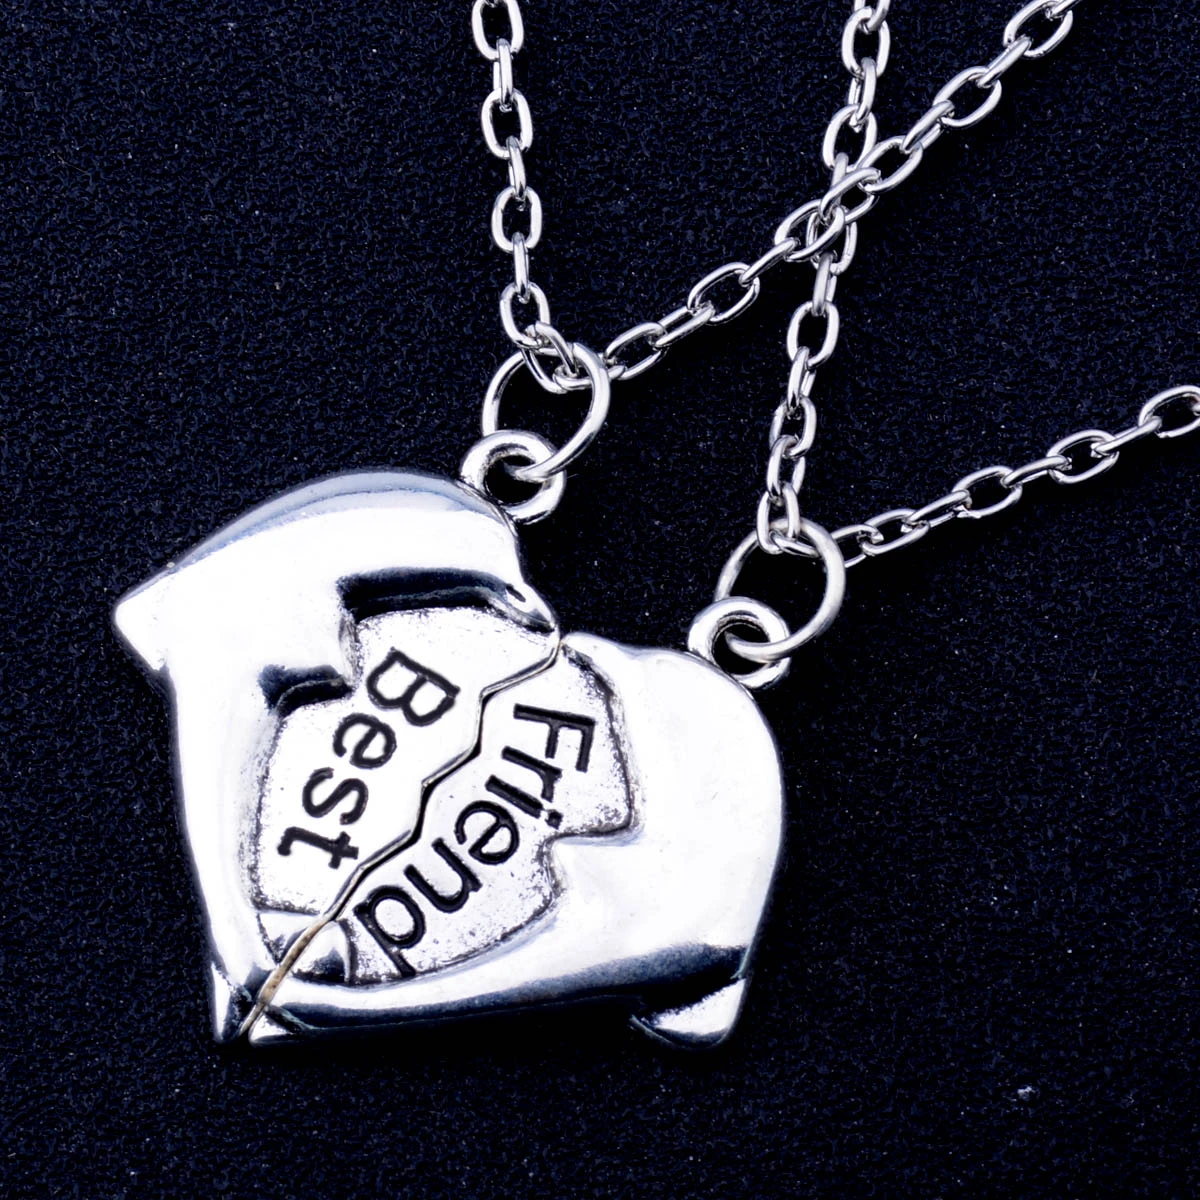 Cute Best Friend Chain Break Heart Pendant BFF Friendship Necklace Charms Gift